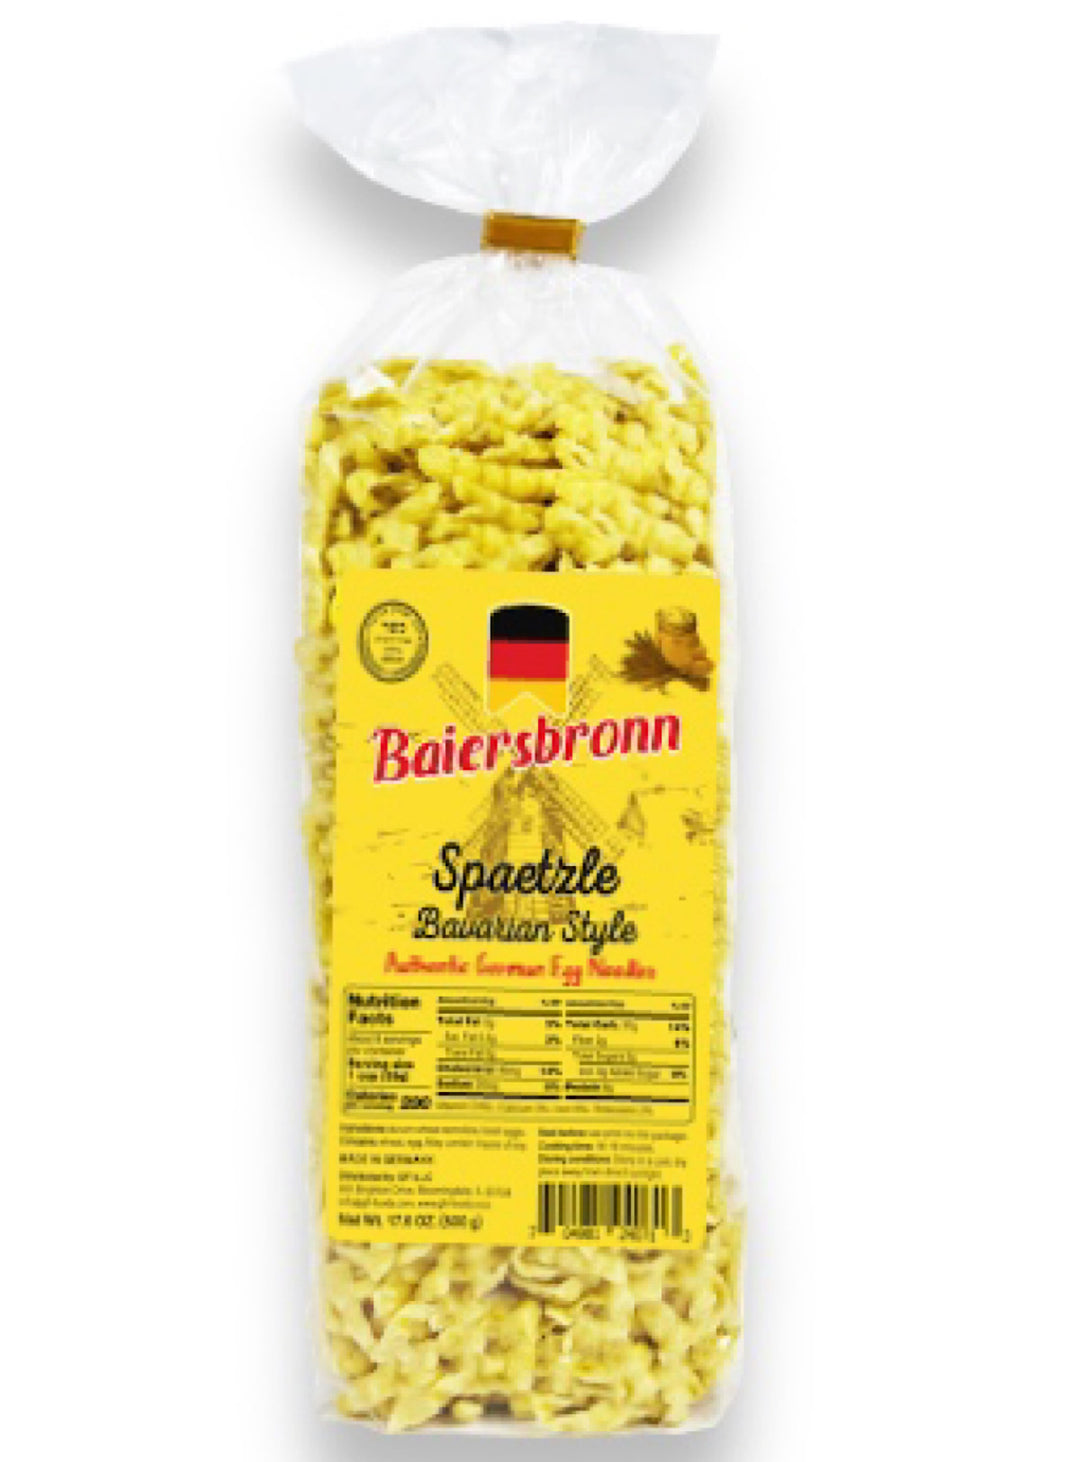 Spaetzle Bavarian style noodles - Germany - 500g